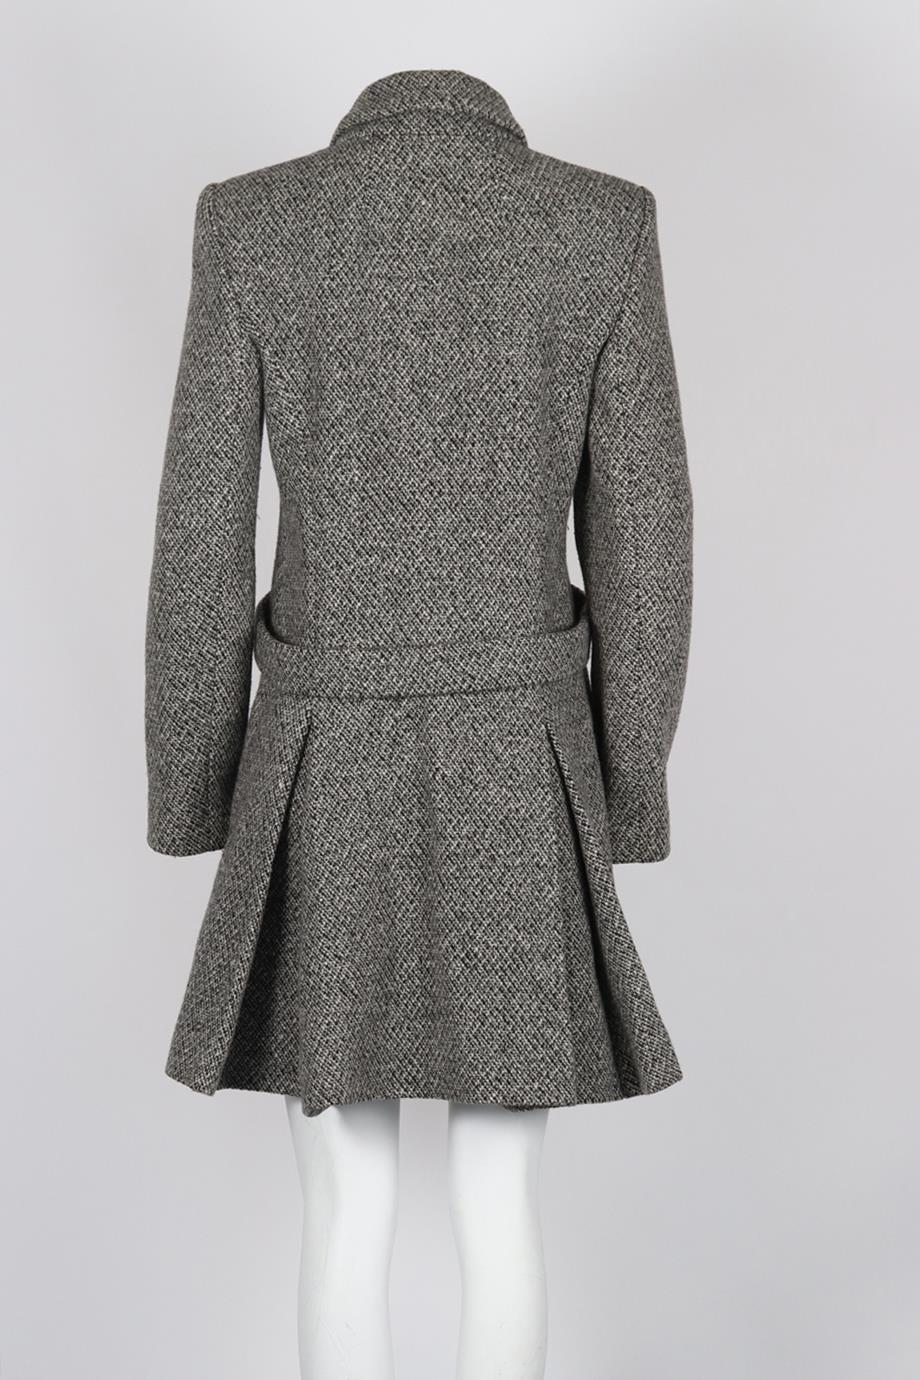 Women's Balenciaga Double Breasted Wool Blend Coat Fr 42 Uk 14